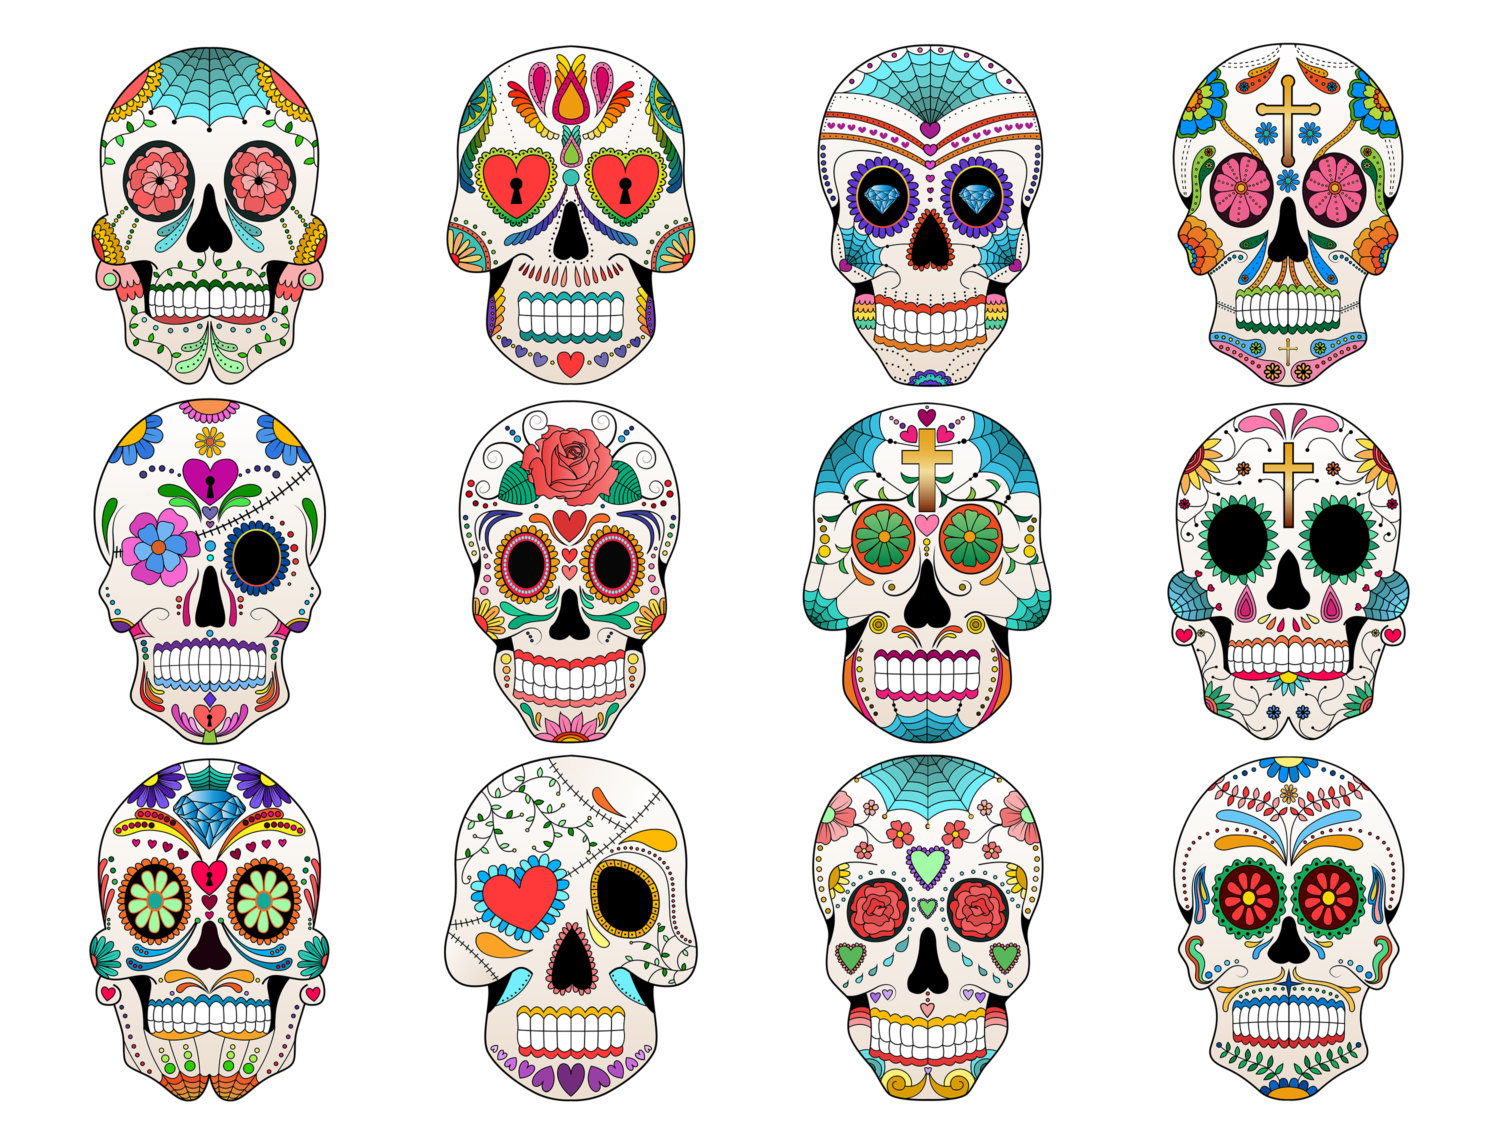 Sugar Skull Clip Art- Set of 12 Colorful Sugar Skulls, PNG, JPG and Vector Files